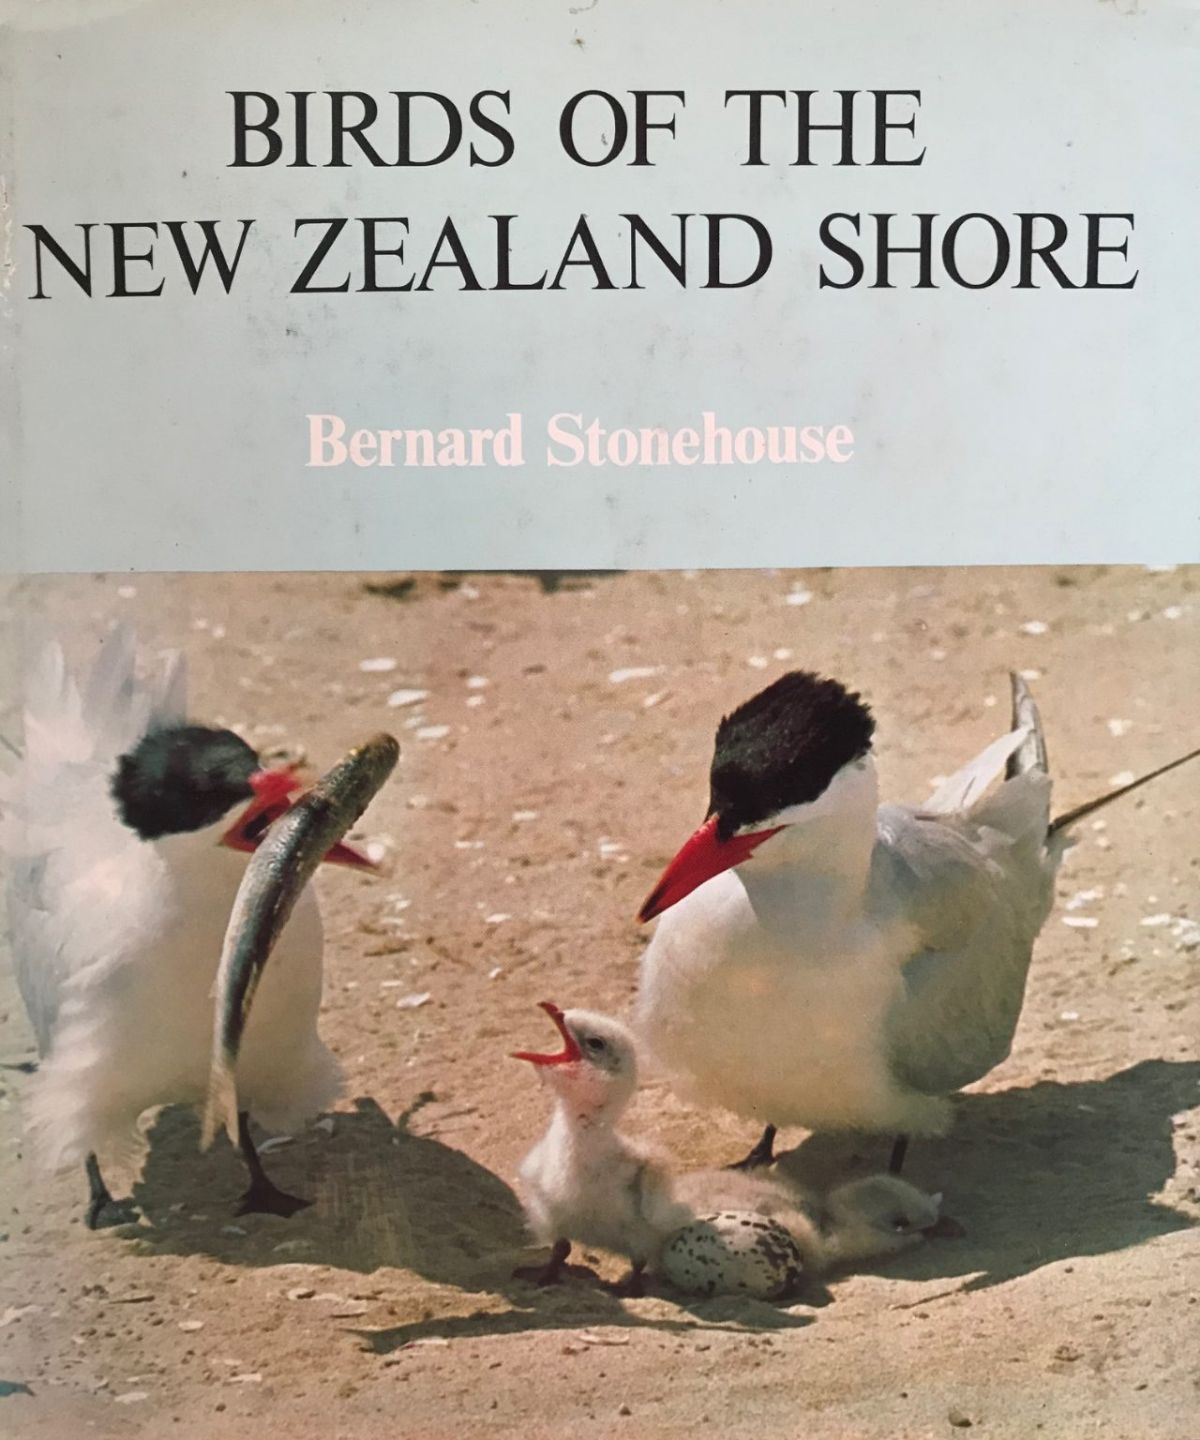 BIRDS OF THE NEW ZEALAND SHORE